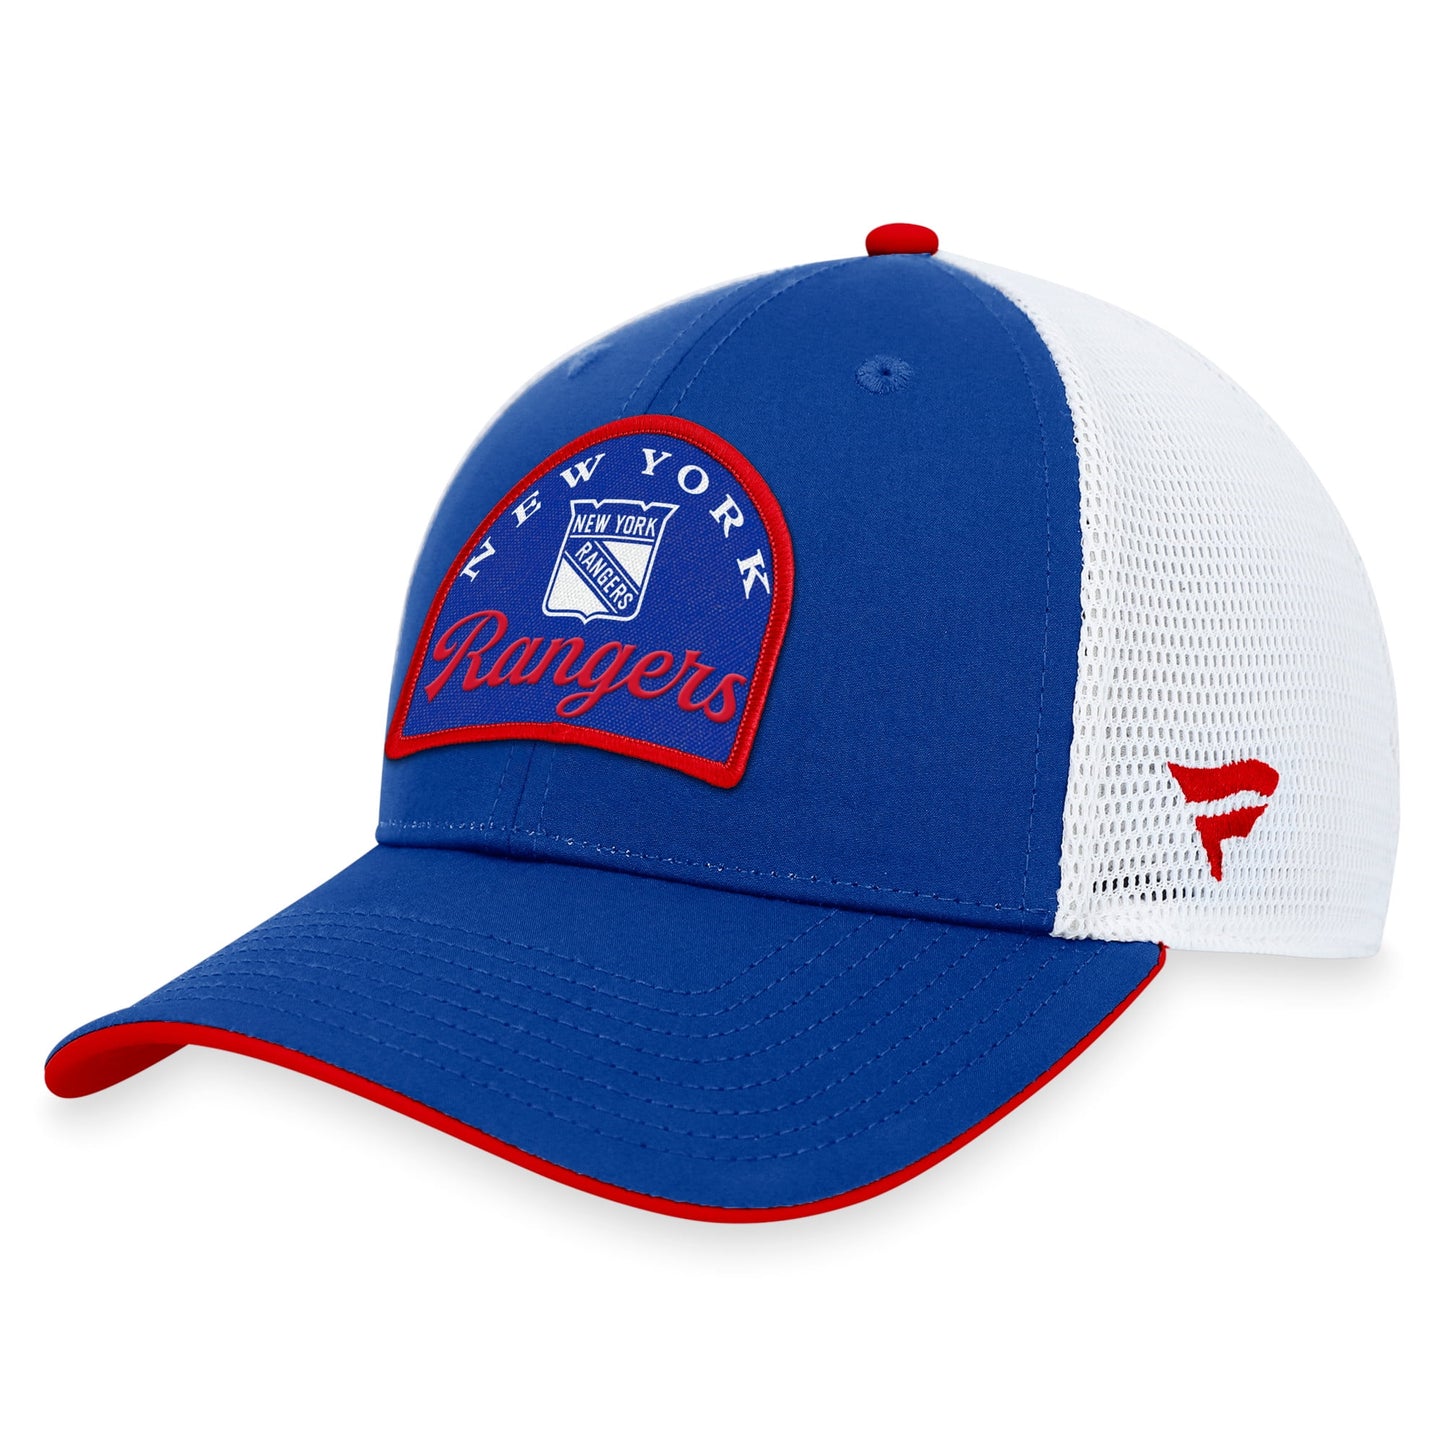 Men's Fanatics Branded Blue/White New York Rangers Fundamental Adjustable Hat - OSFA